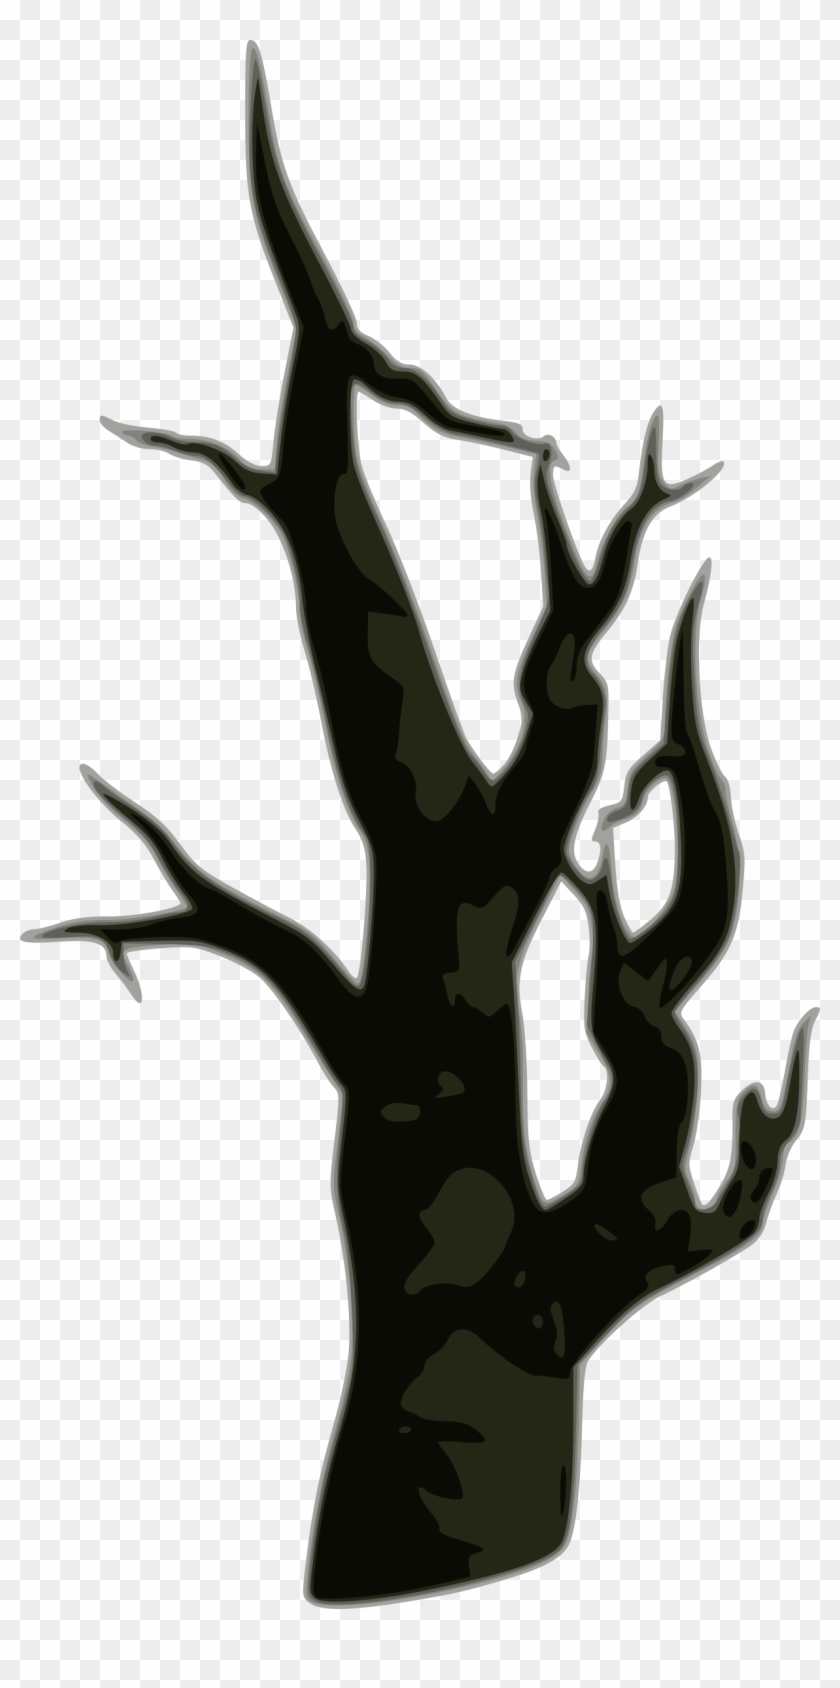 Dead Tree Clipart Empty - Dead Tree Clip Art #5123